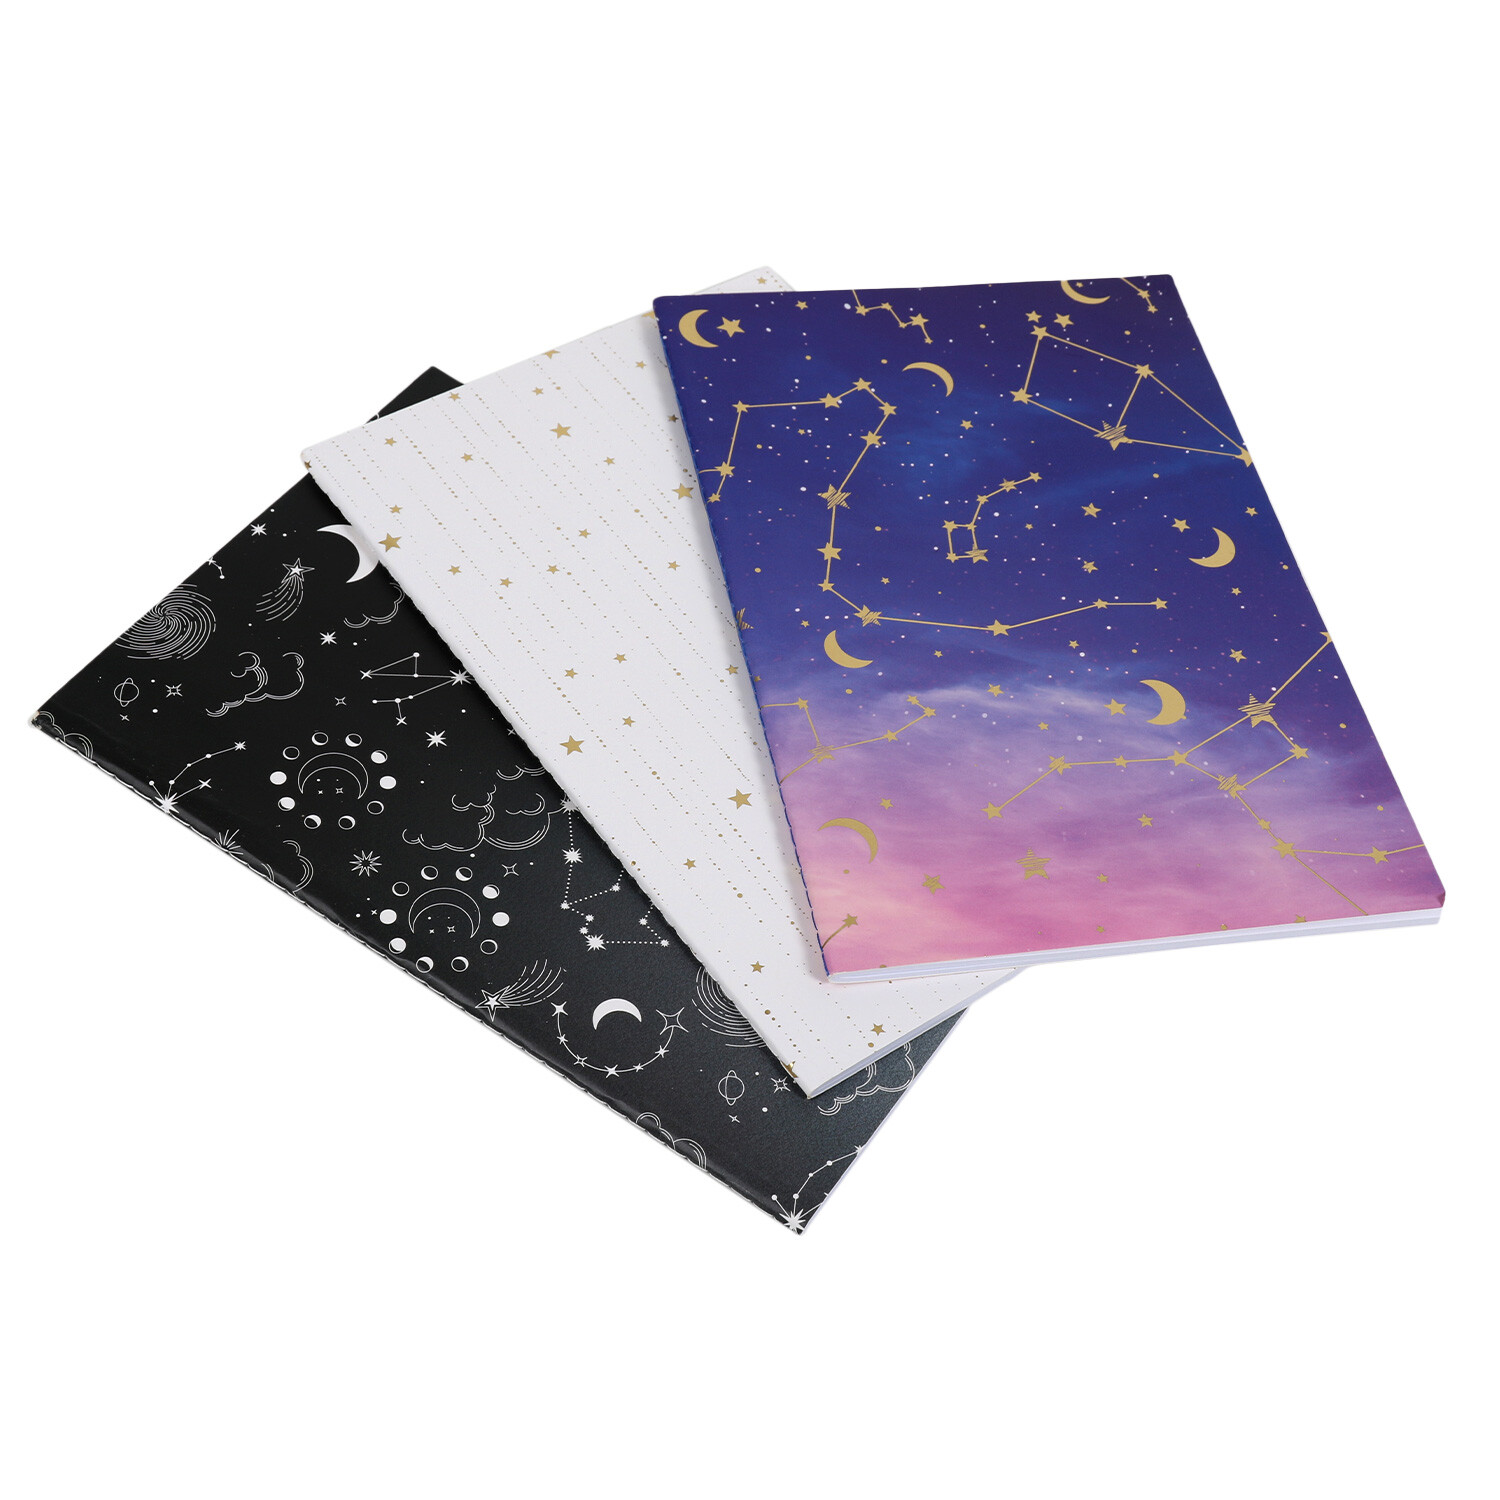 Stargazer Notebook 3 Pack Image 2